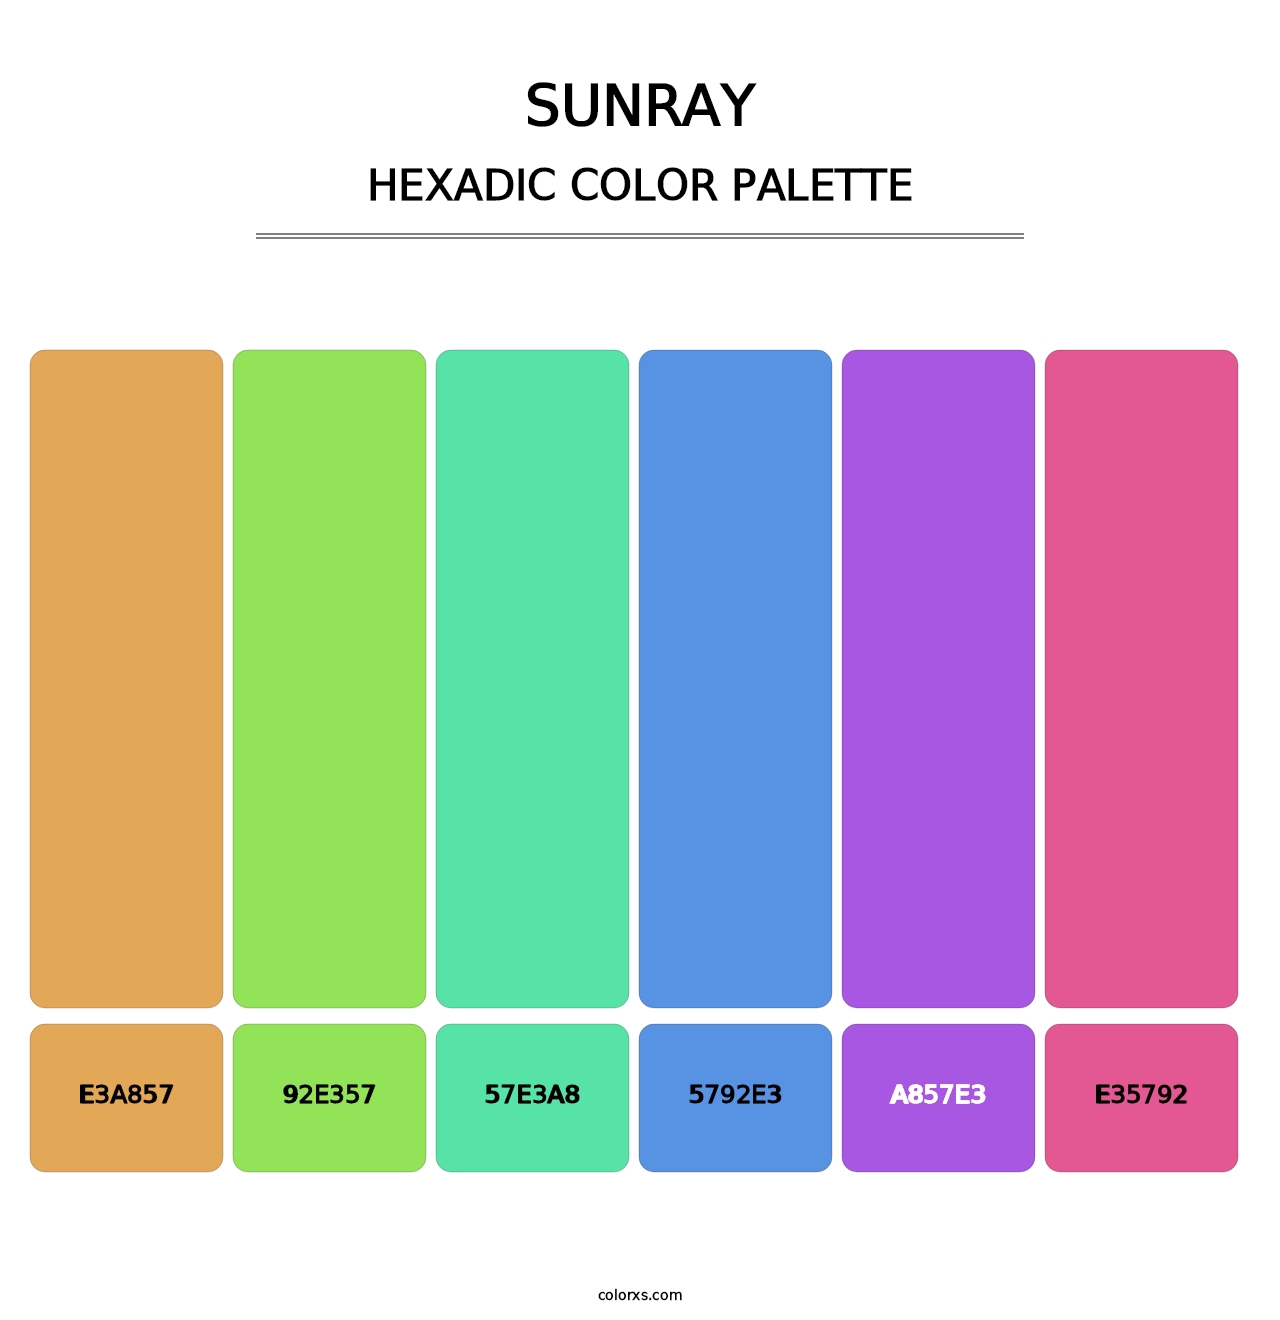 Sunray - Hexadic Color Palette